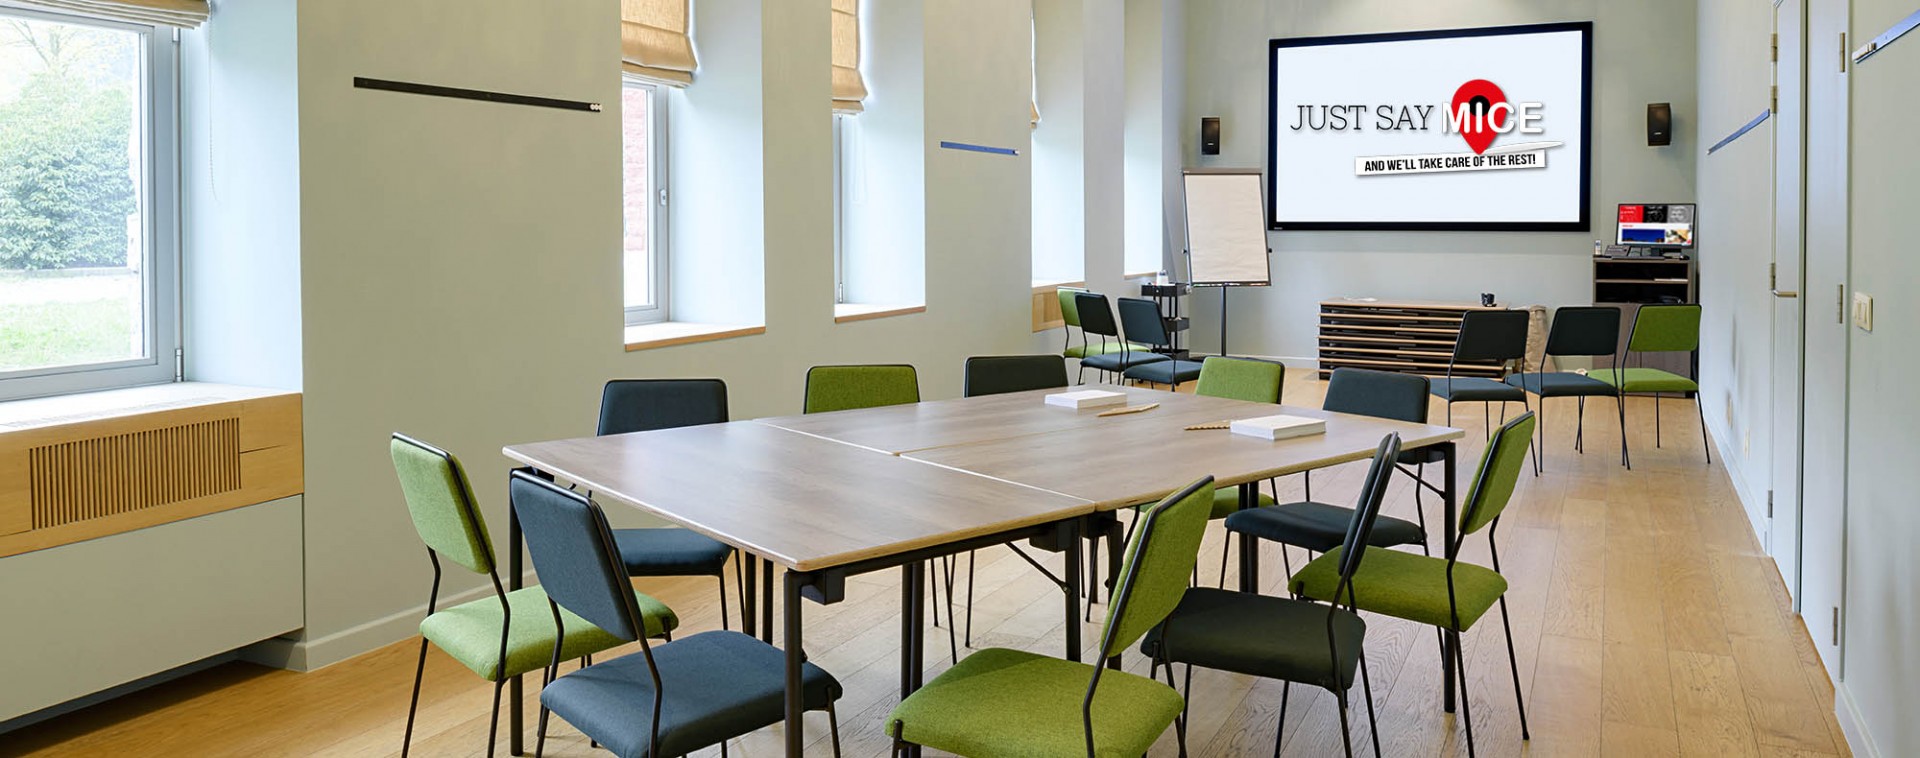 Meeting rooms in Liège province - Liège-Spa Businessland | © Châteauform